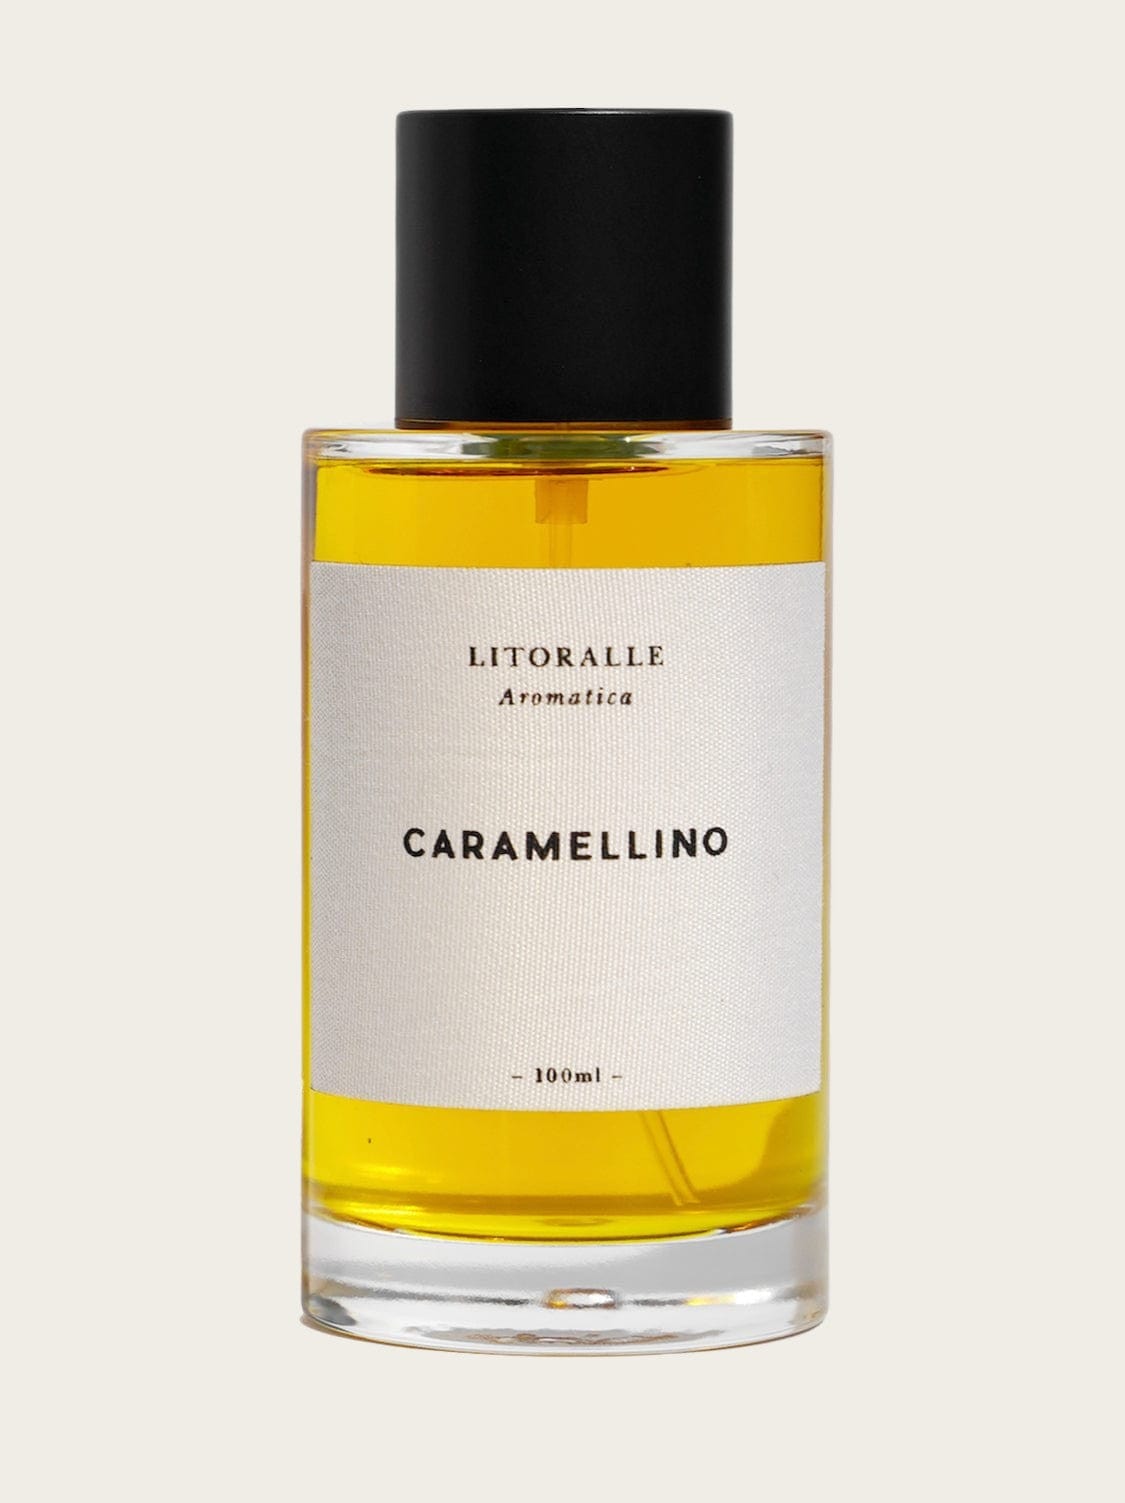 Litoralle Aromatica perfume 100ml Caramellino sunja link - canada